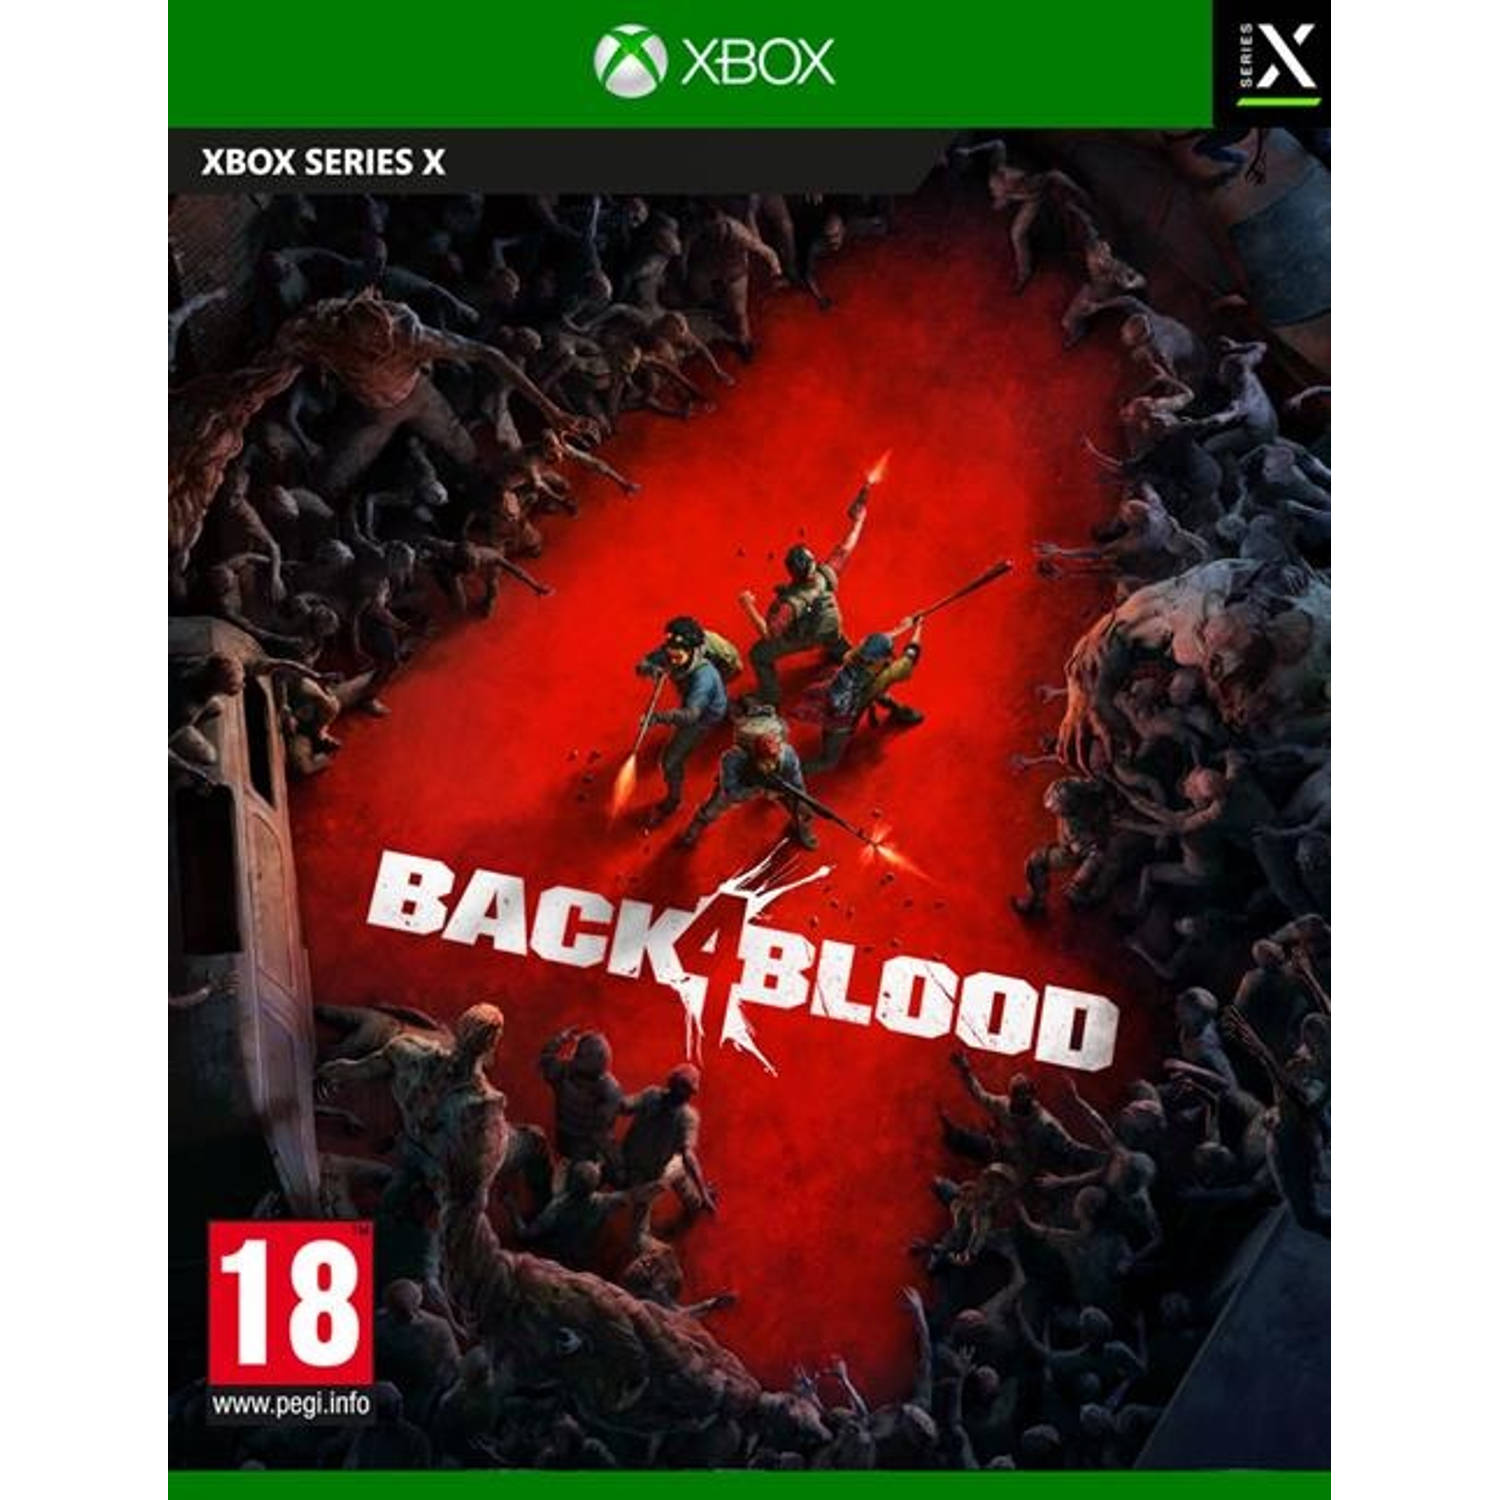 Back 4 blood, (X-Box Series X). XBOXSERIESX